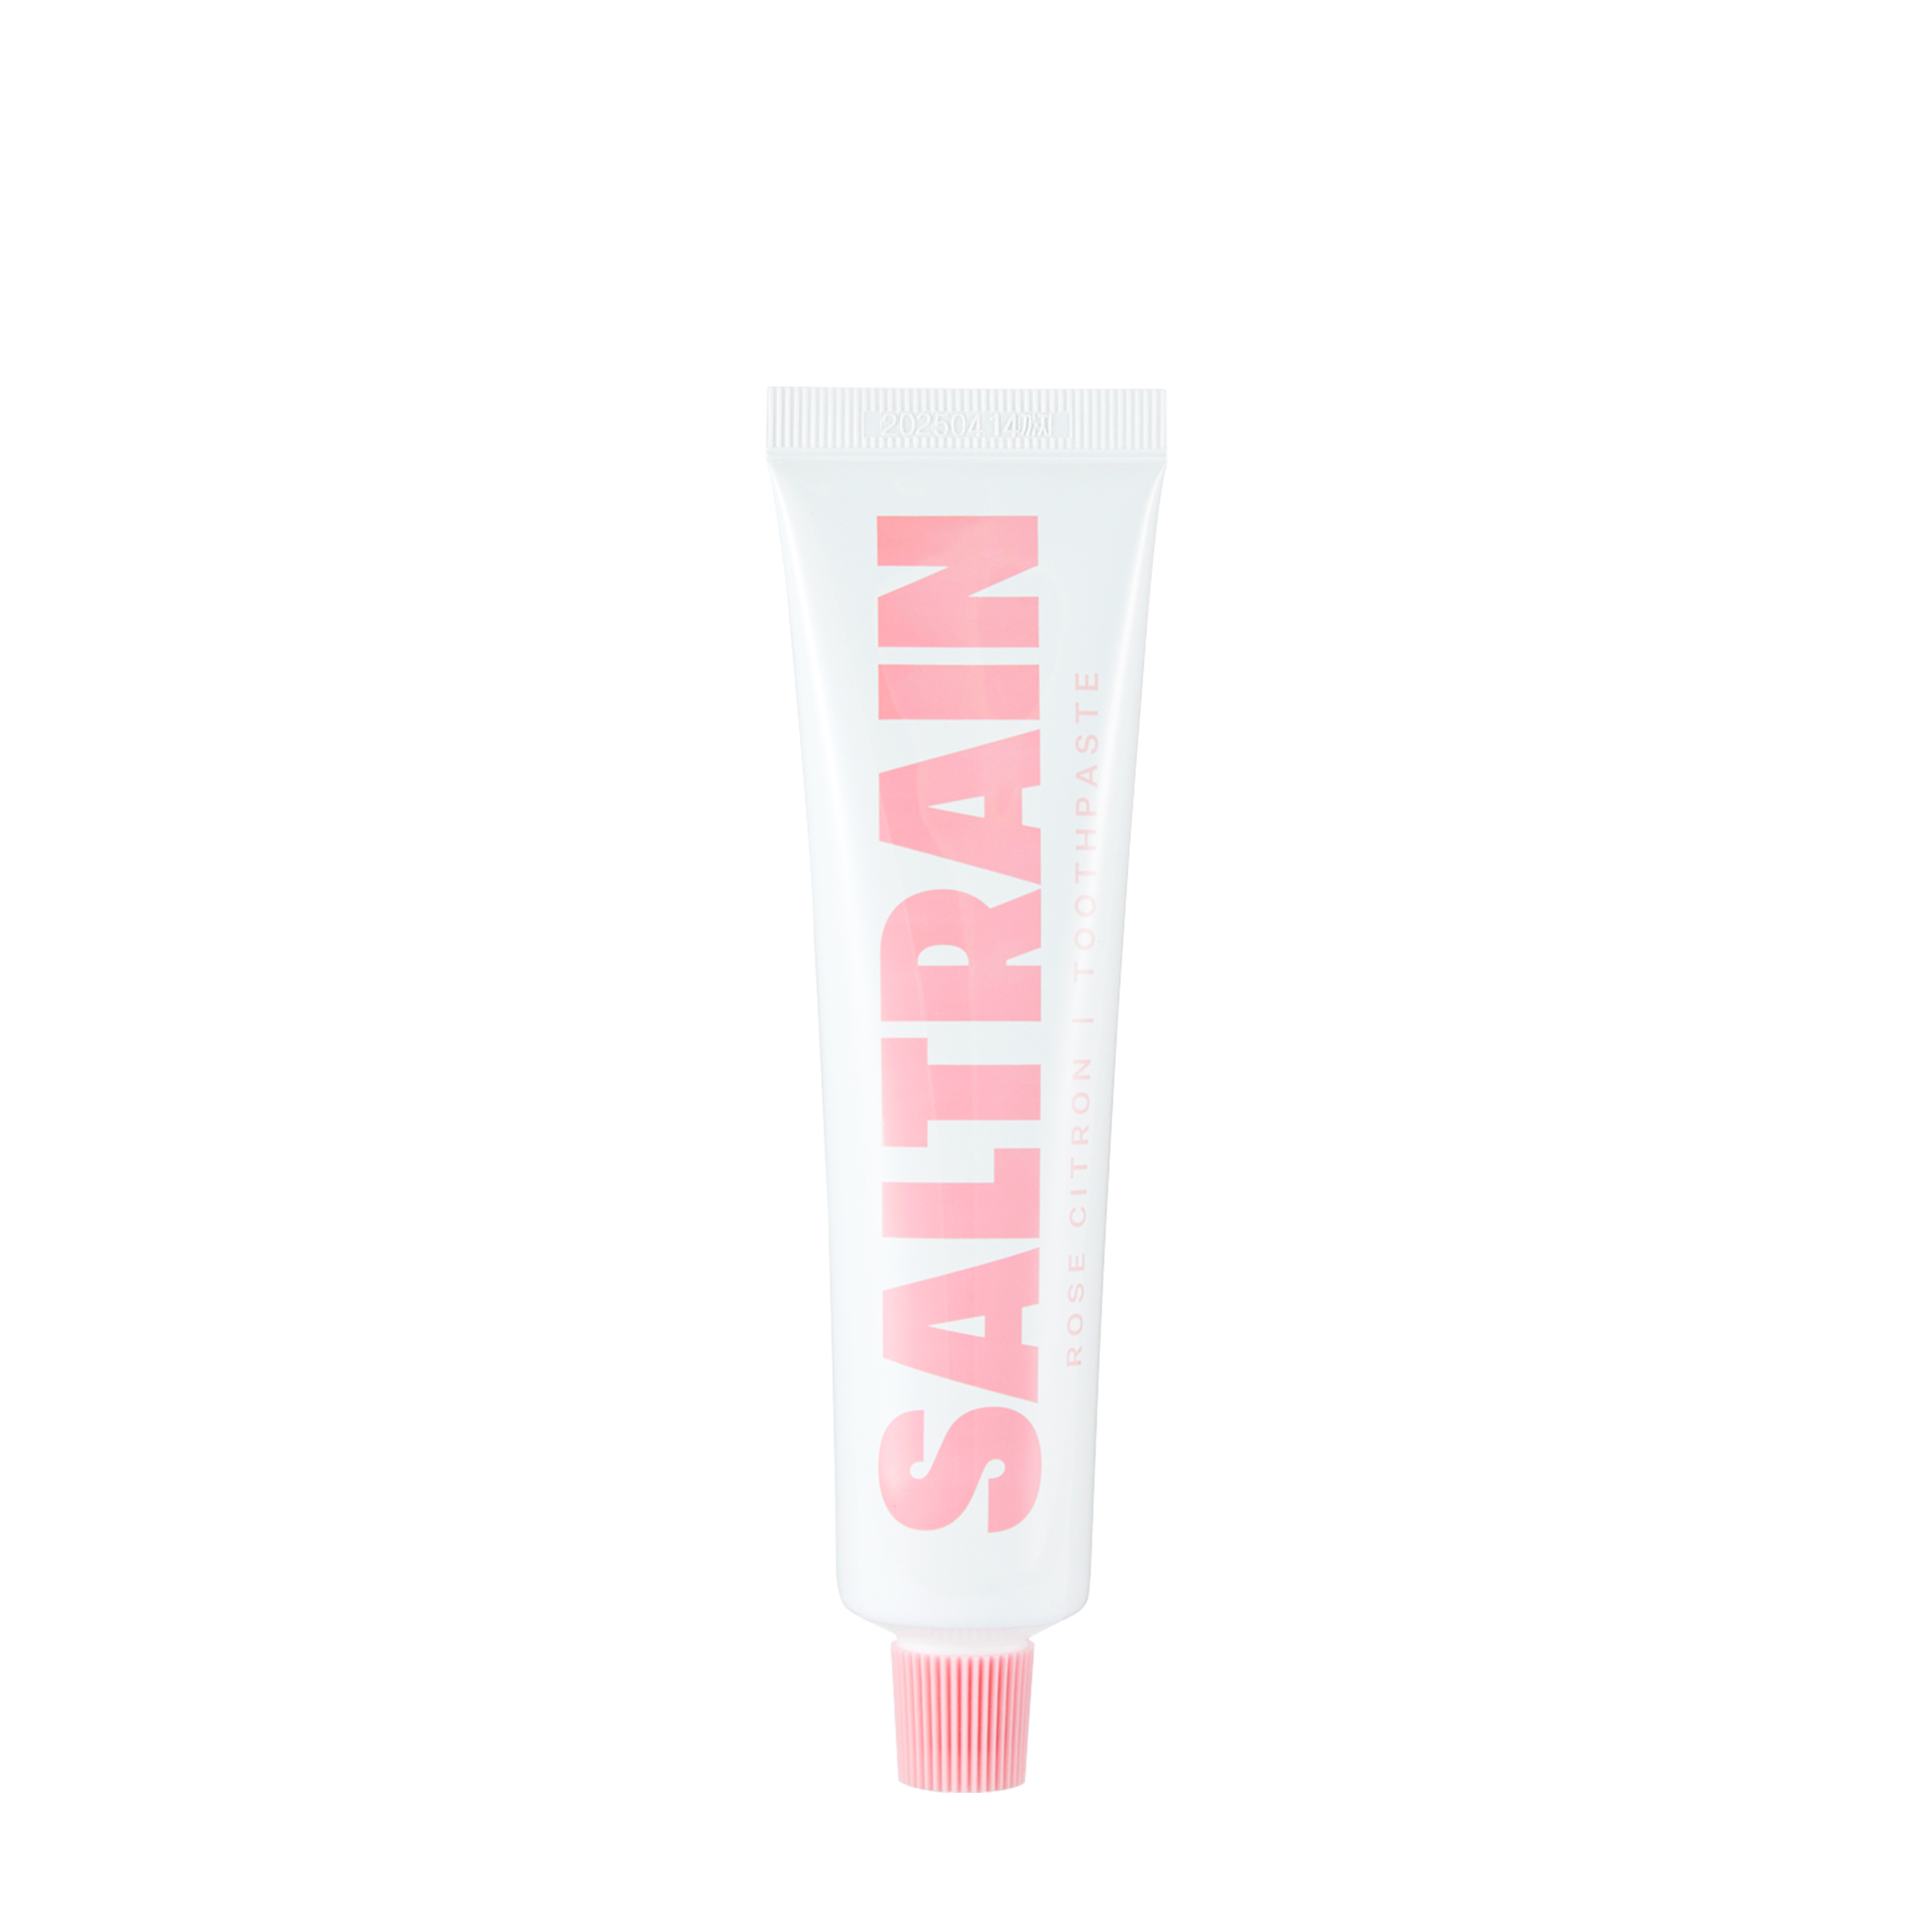 SALTRAIN SALTRAIN Освежающая зубная паста без фтора Rose Citron Toothpaste 100 гр